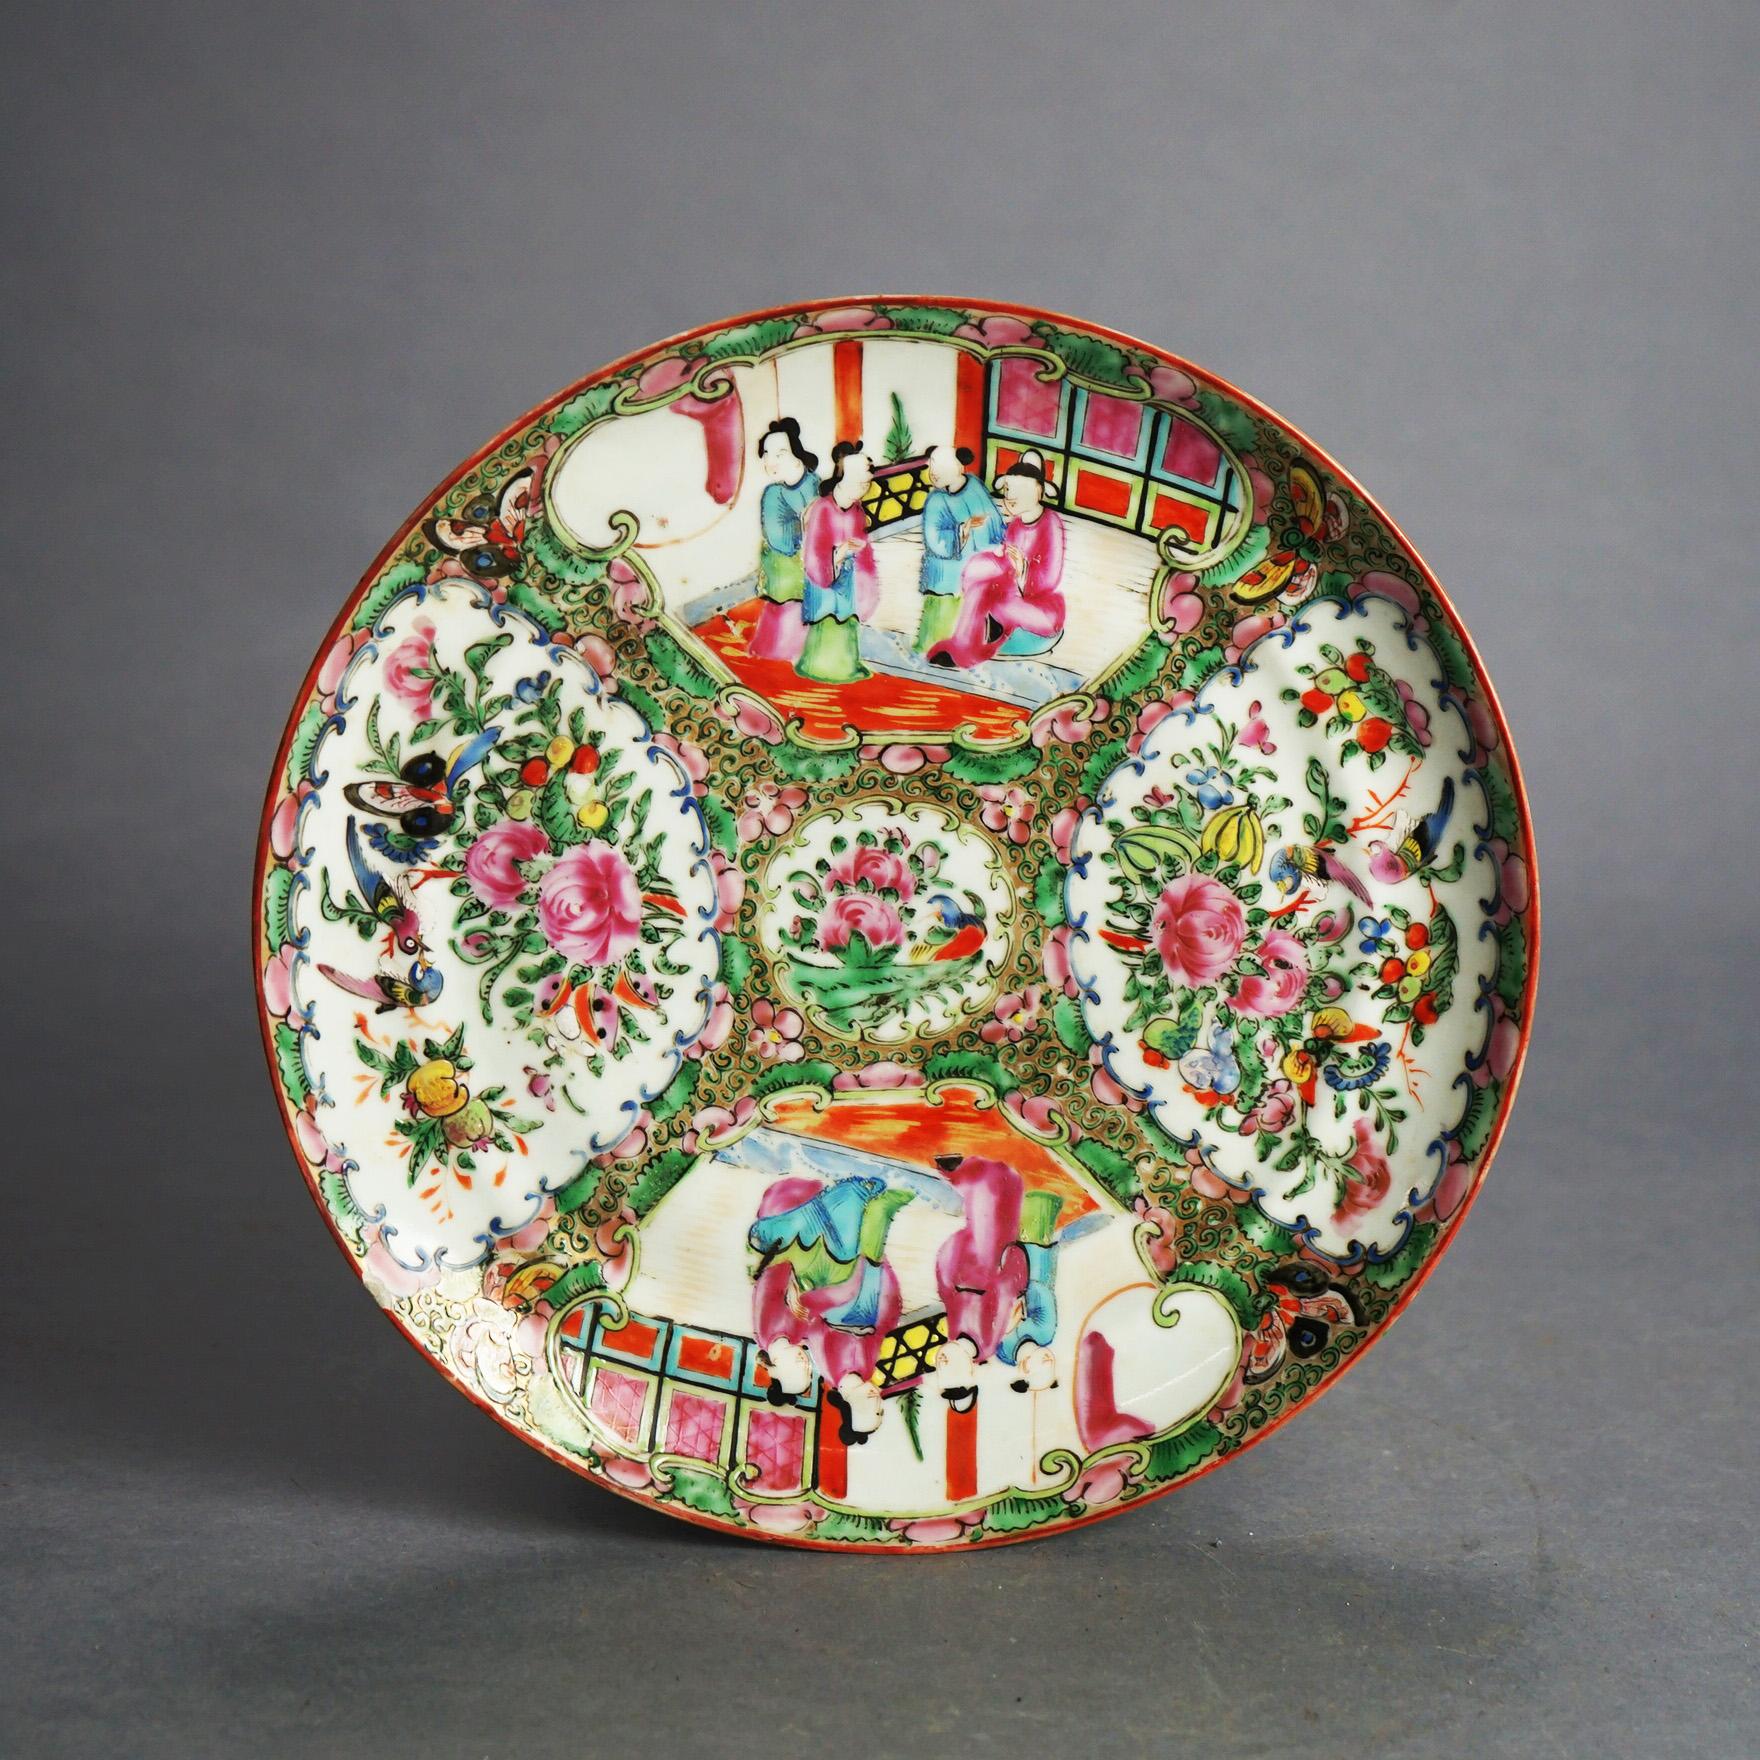 Four Chinese Rose Medallion Porcelain Plates with Garden & Genre Scenes C1920

Measures - largest 1